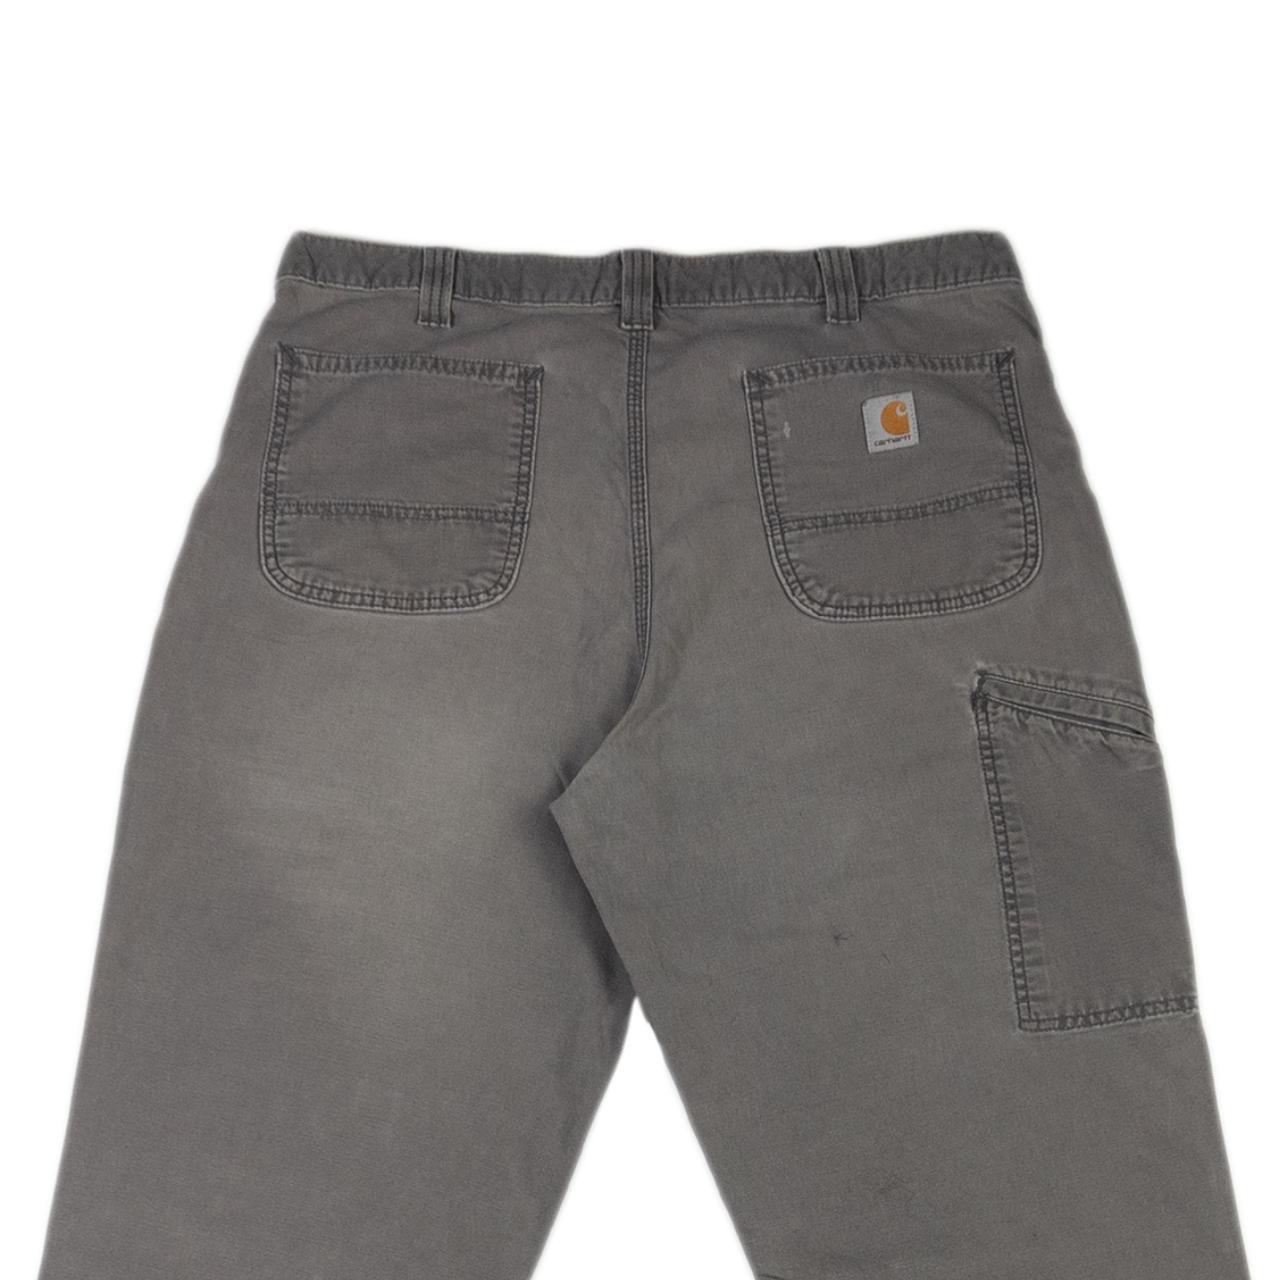 Vintage Carhartt Grey Carpenter Trousers Jeans This... - Depop